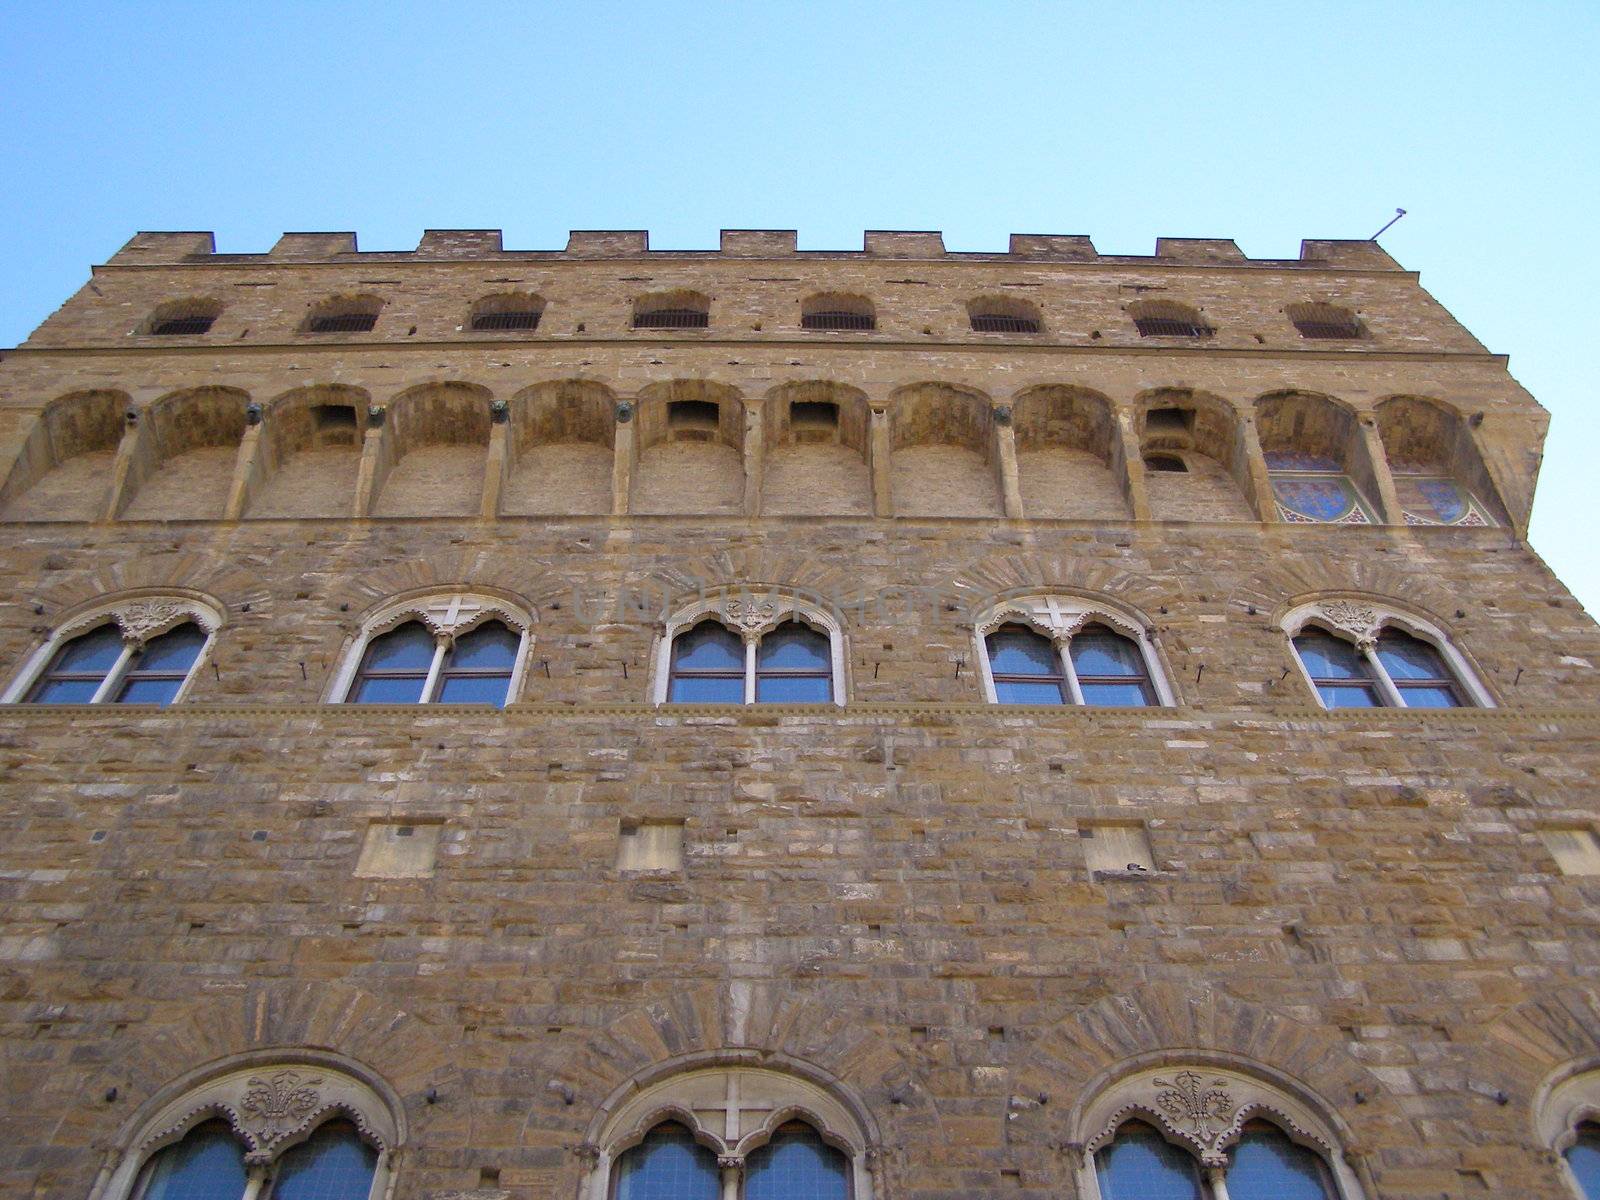 landmarks of Florence